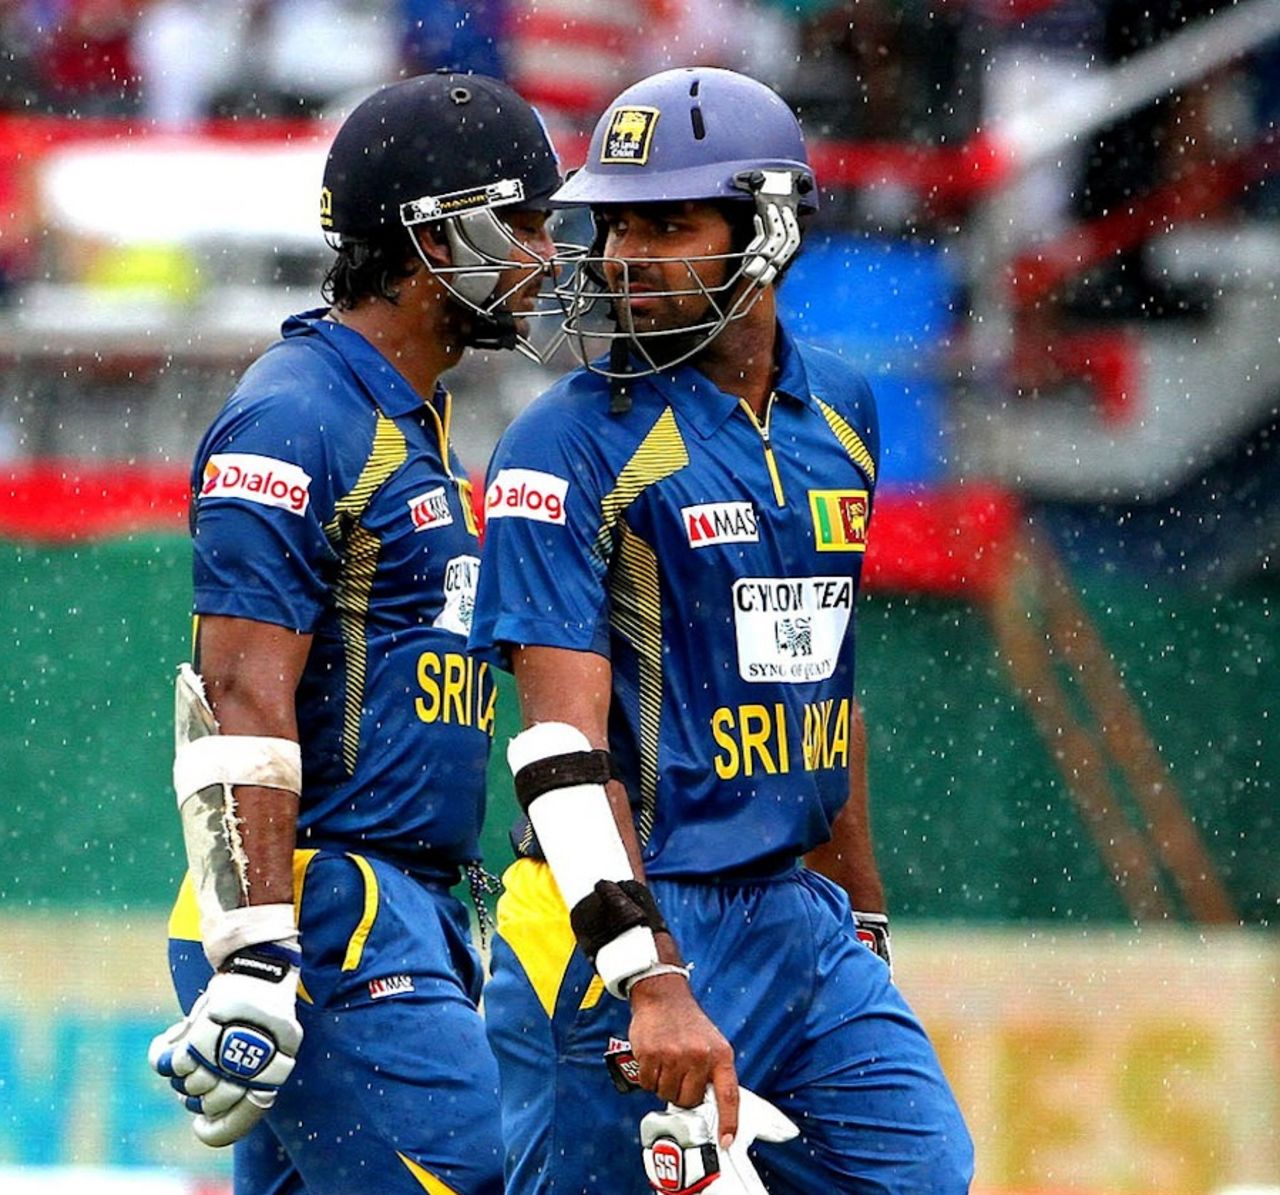 Kumar Sangakkara and Lahiru Thirimanne walk off after a rain interruption, West Indies v Sri Lanka, West Indies tri-series, Port of Spain, July 7, 2013